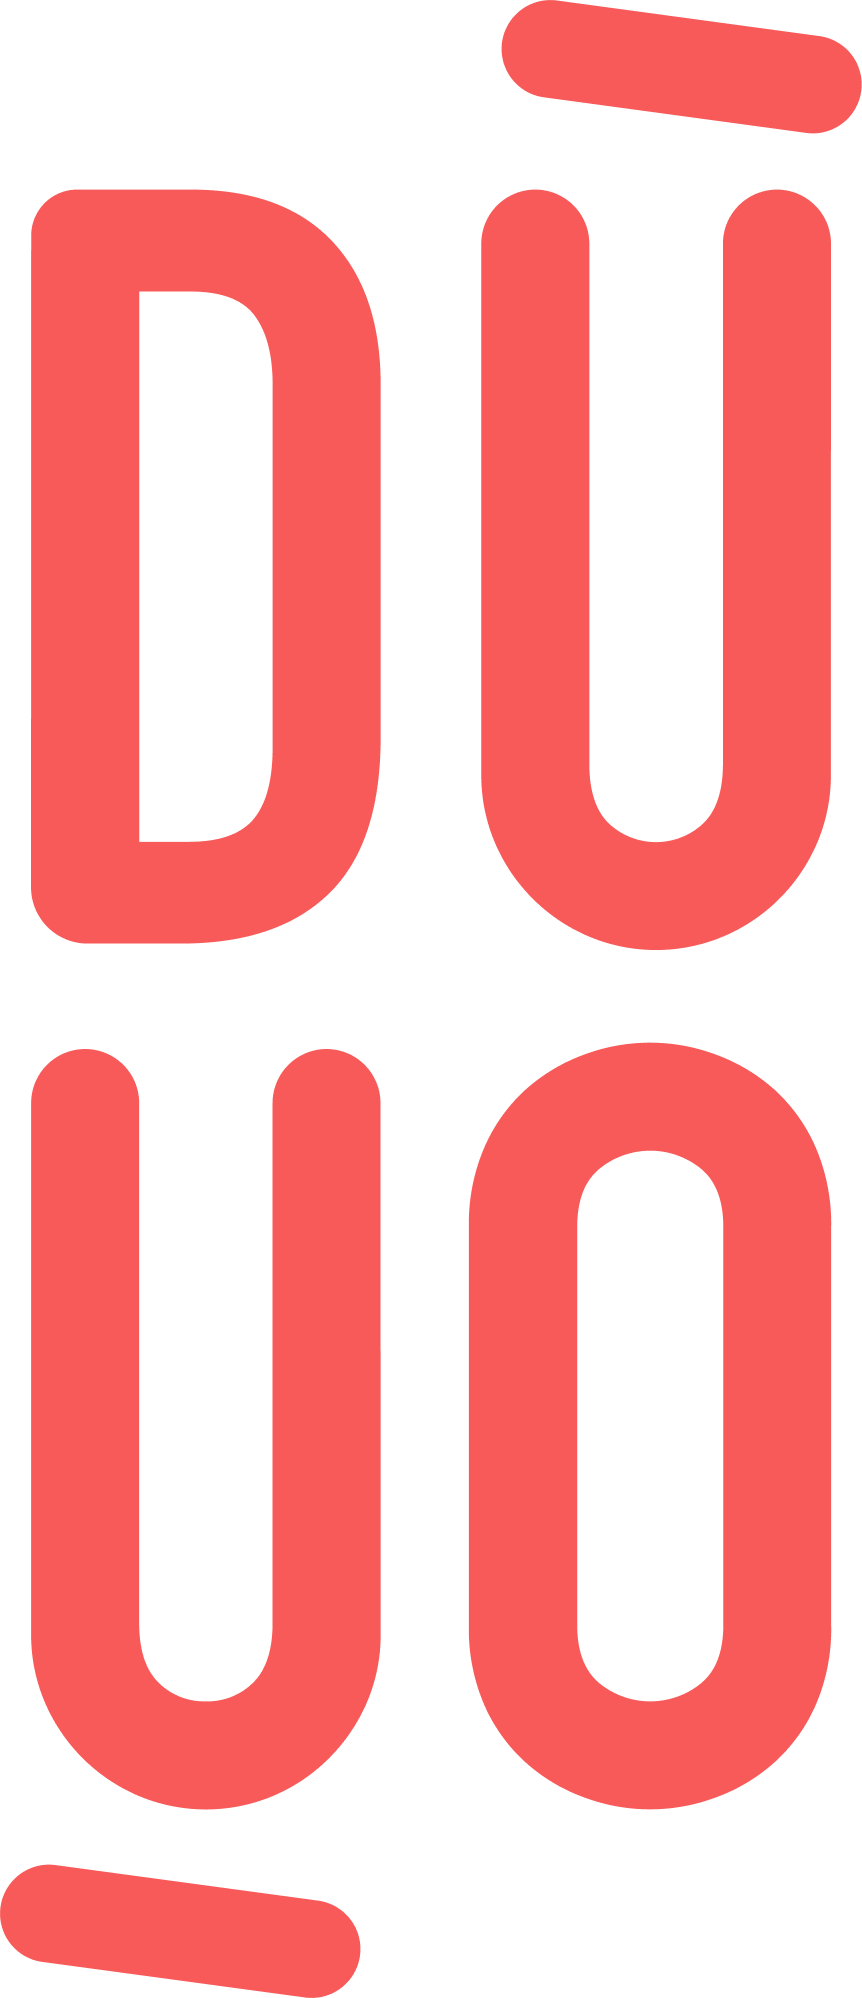 DUUO company logo